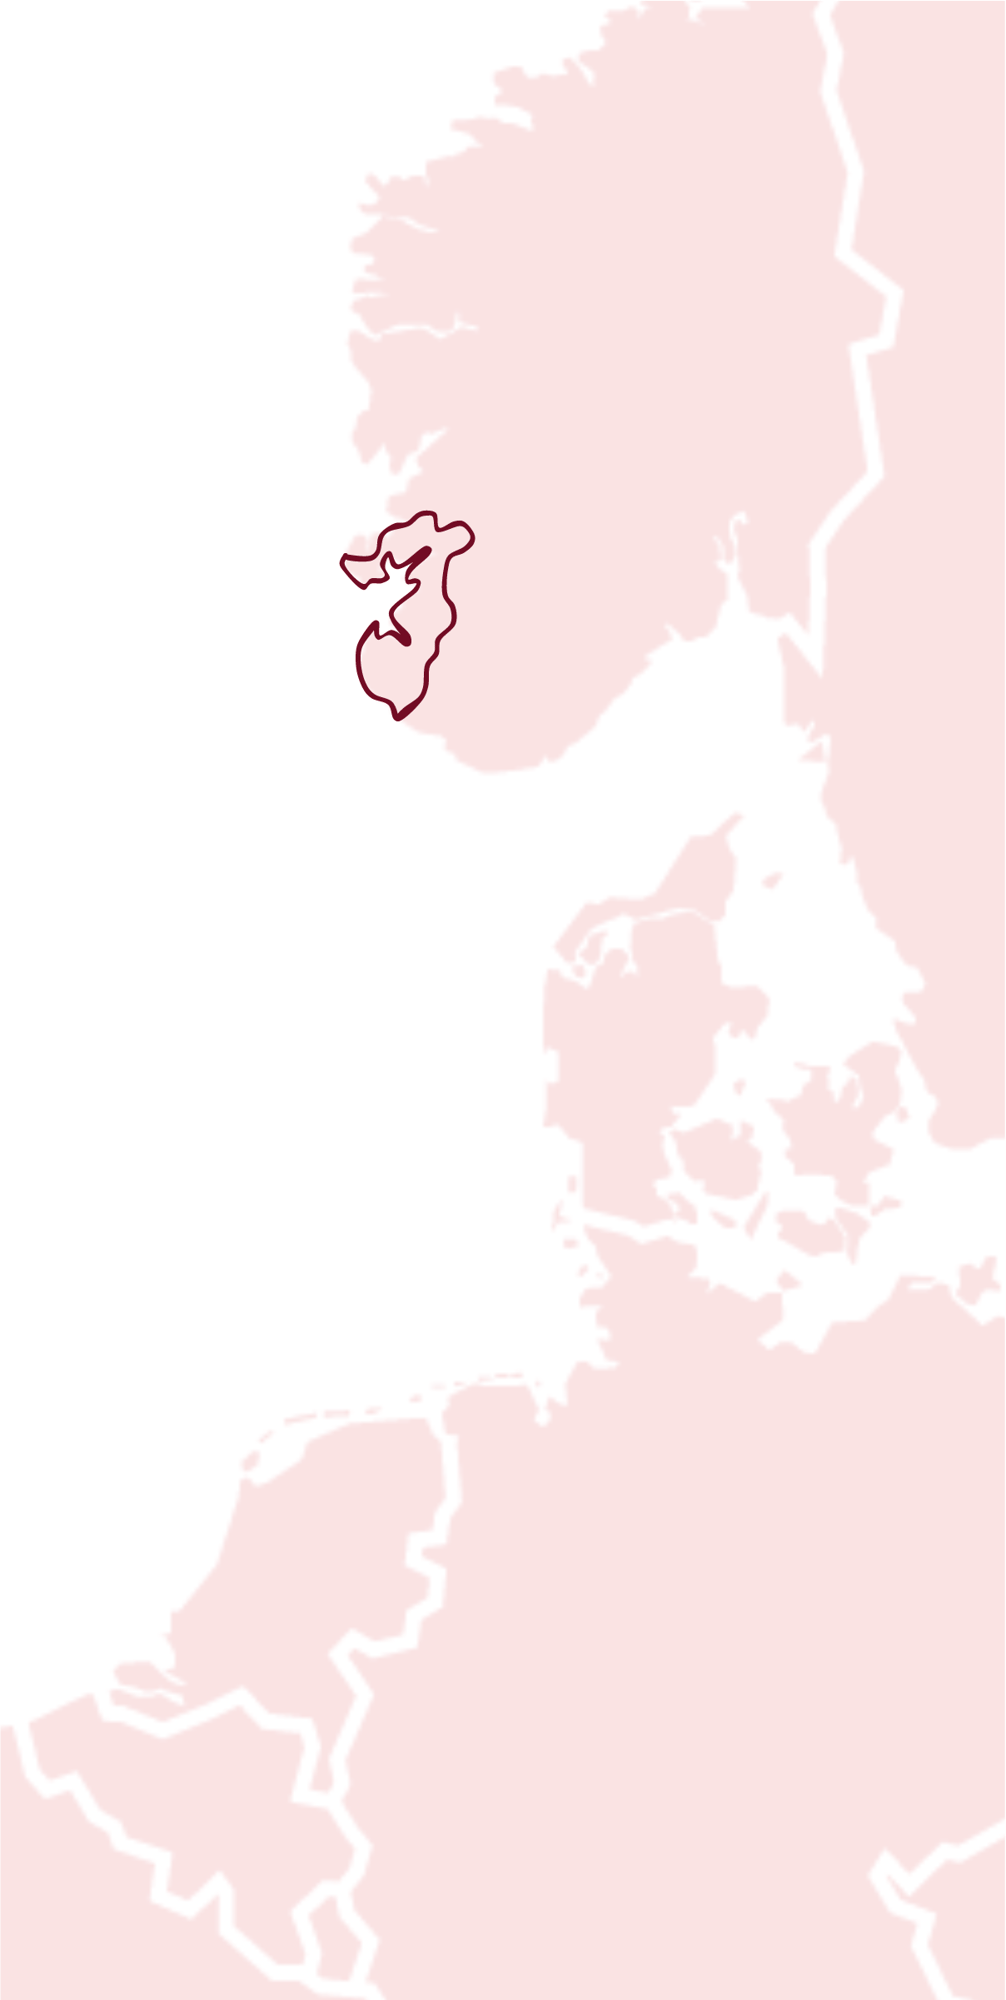 Southwest Norway kart